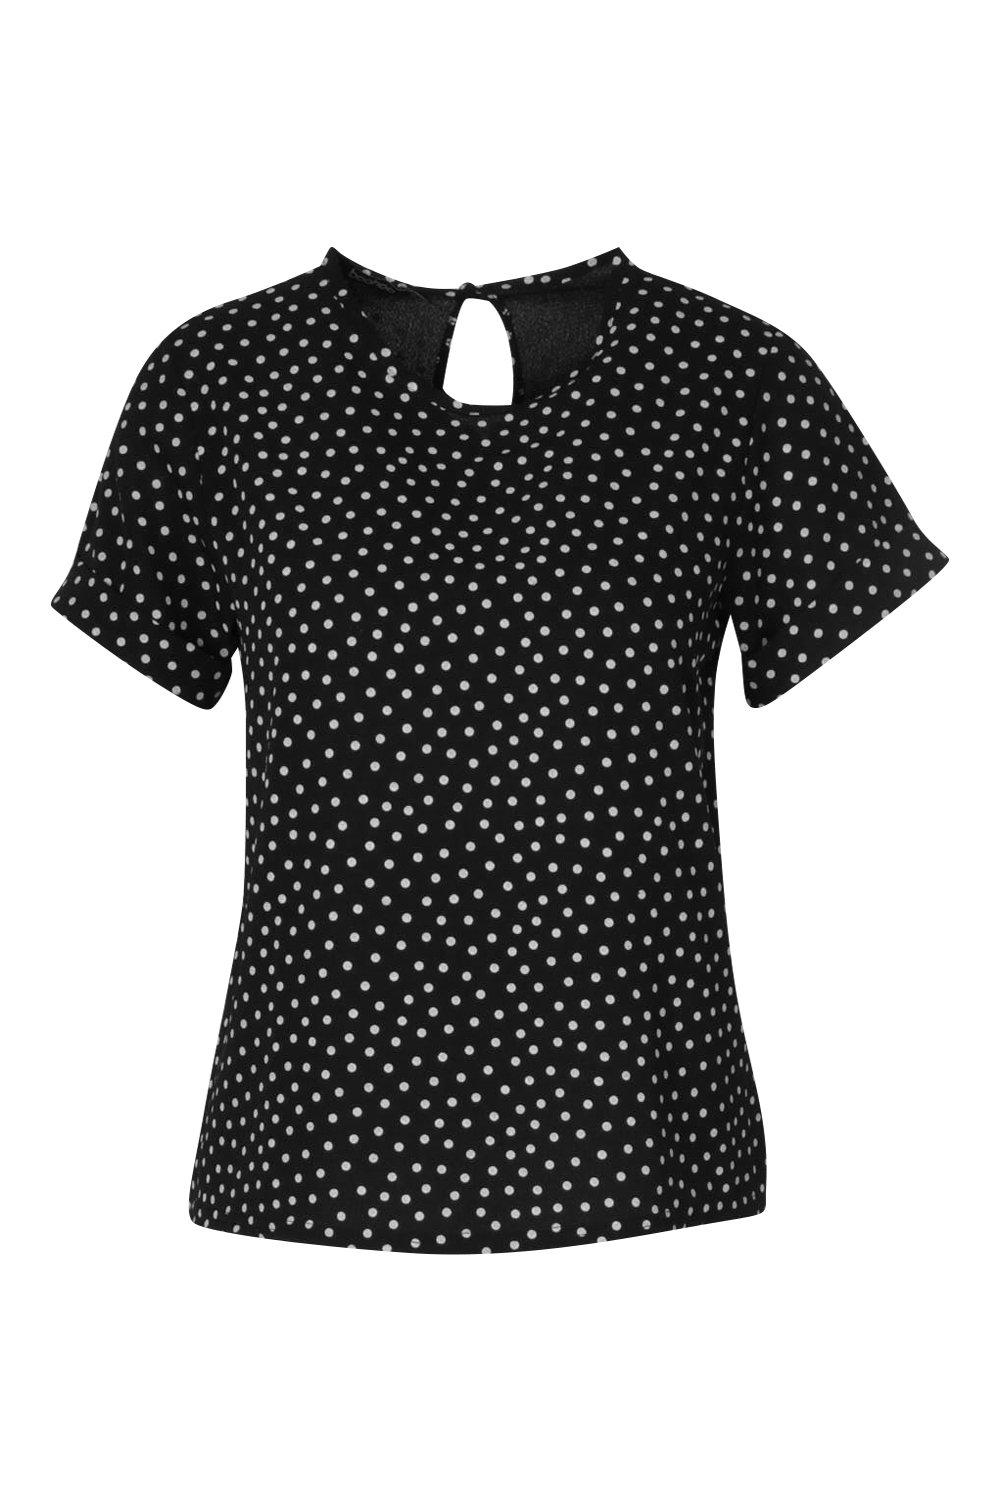 short sleeve polka dot blouse